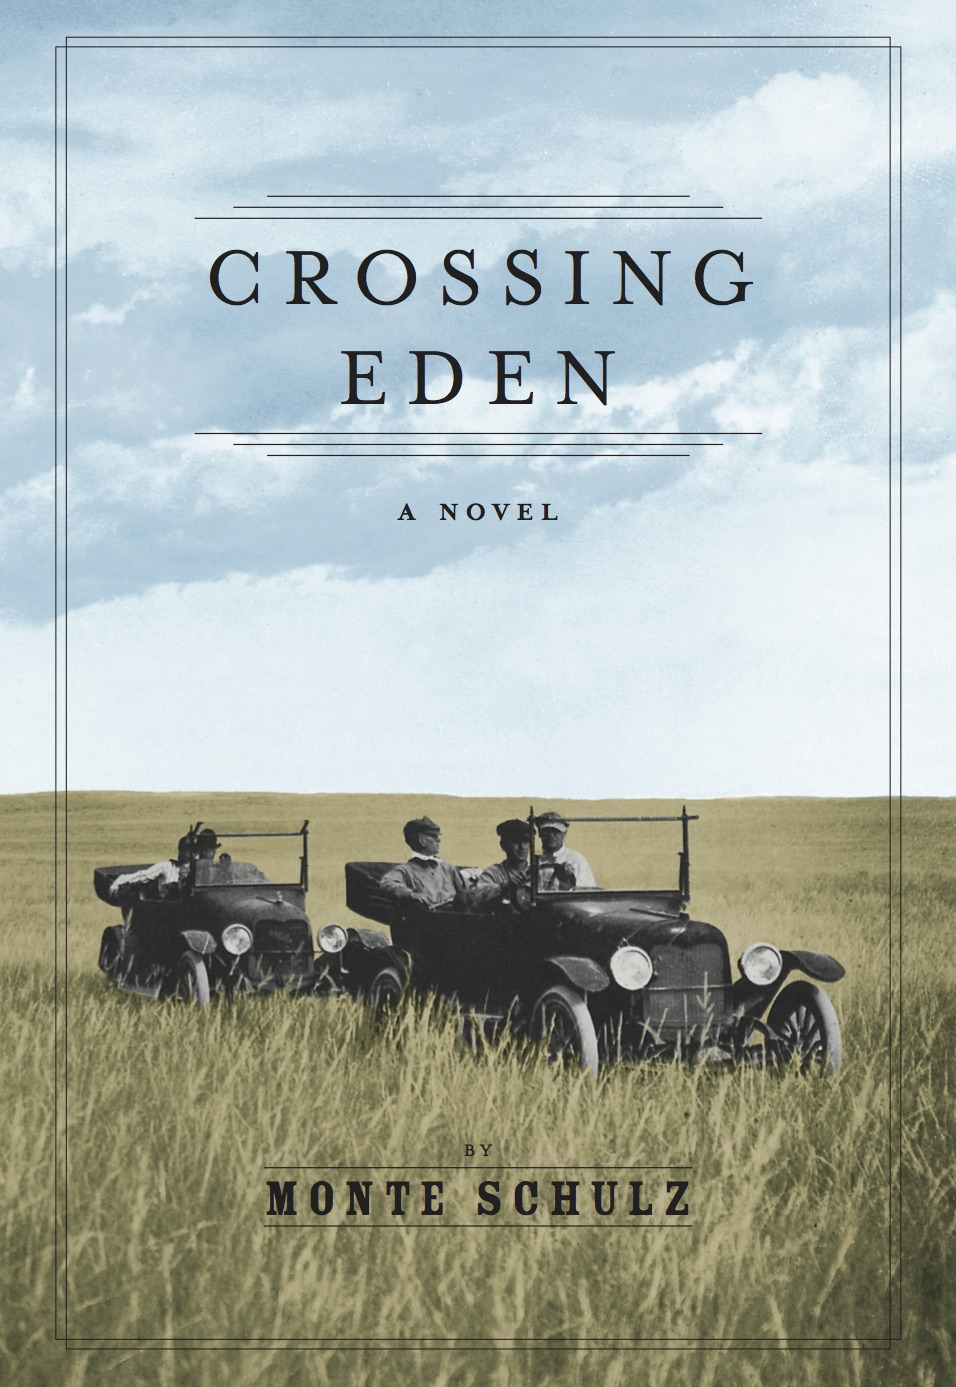 "Crossing Eden" by Monte Schulz